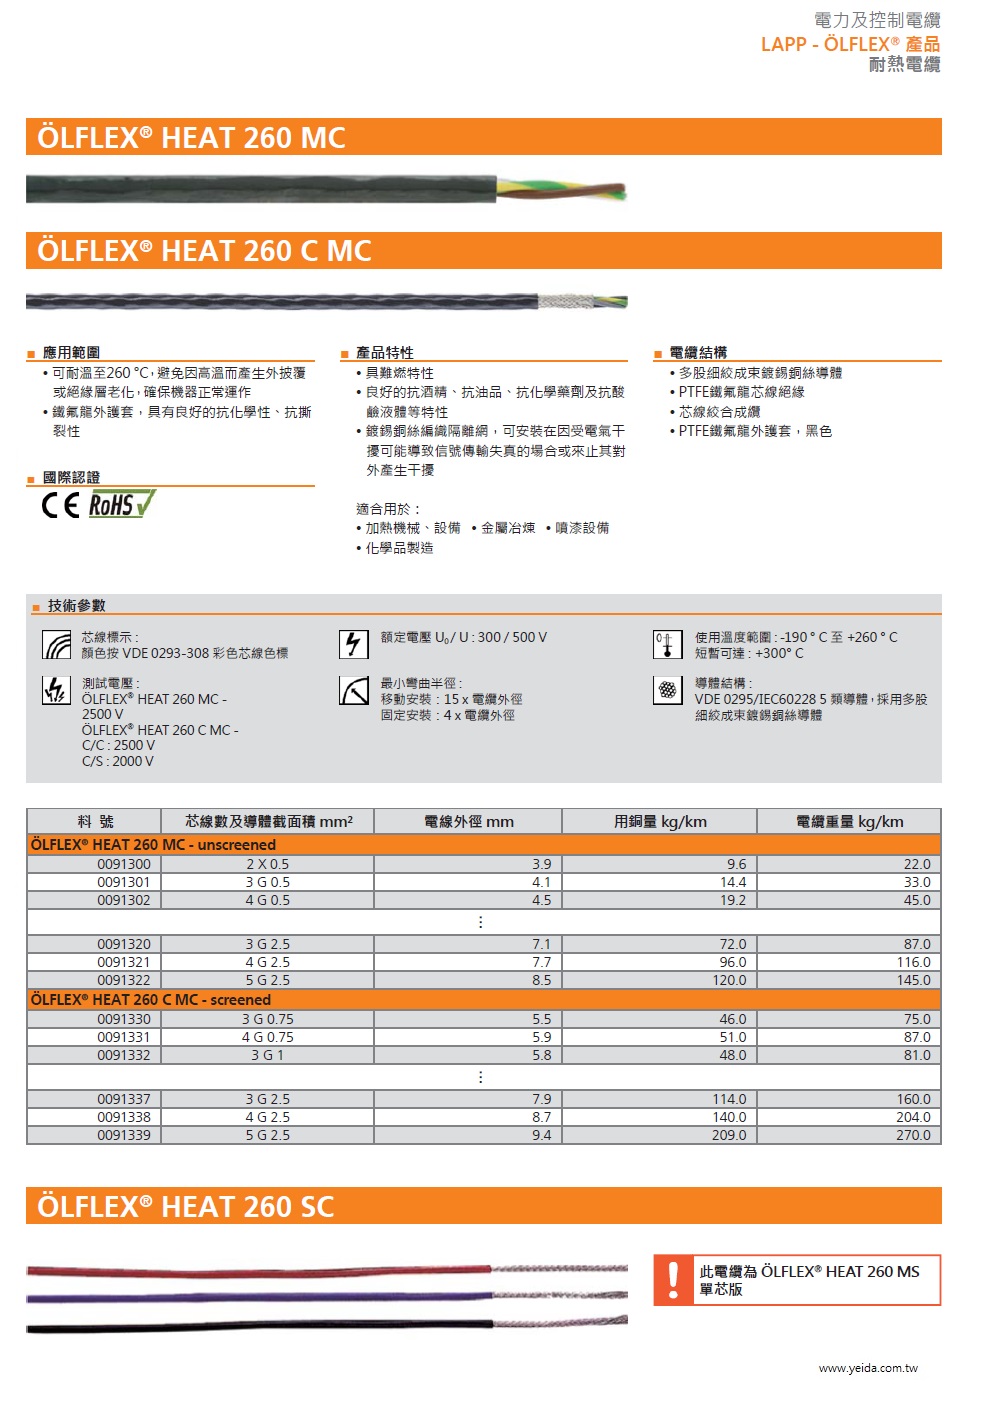 LAPP ÖLFLEX ® HEAT 260 MC PTFE鐵氟龍耐熱電纜產品圖